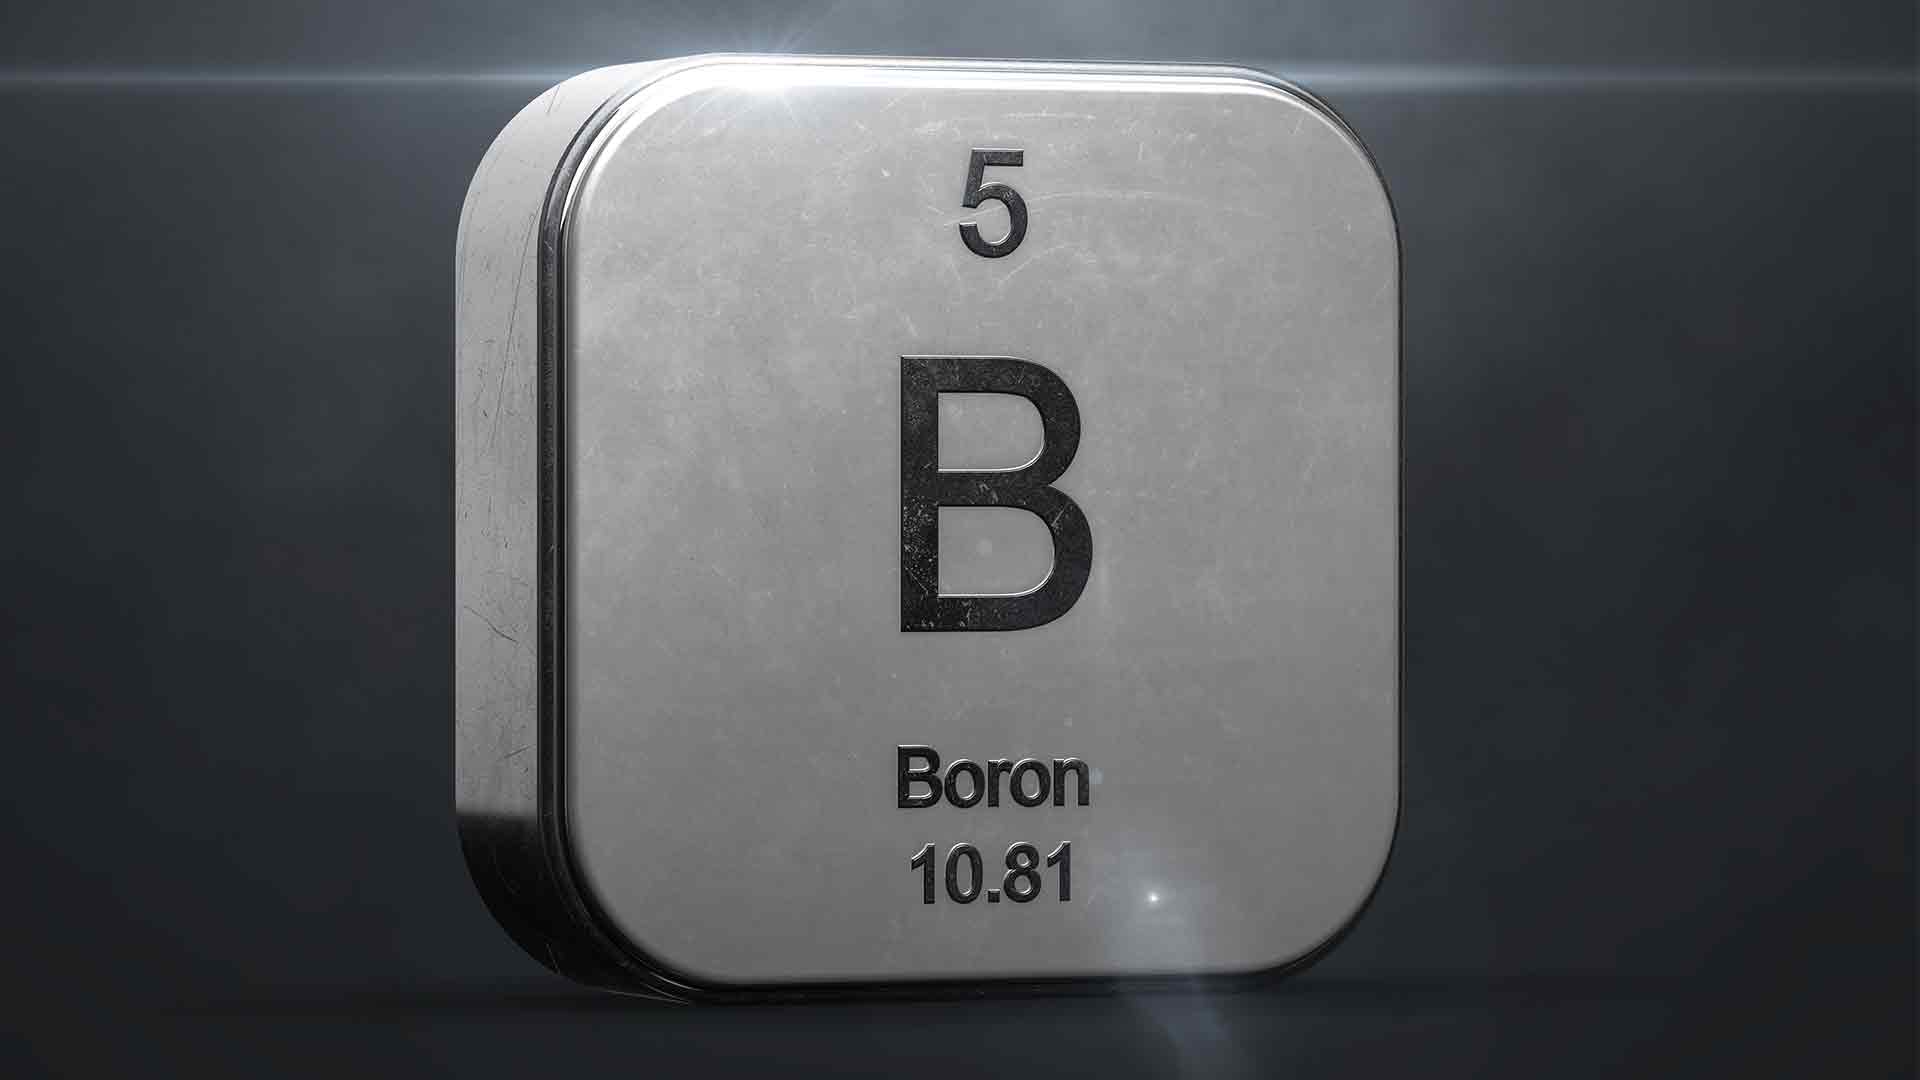 boron symbol periodic table